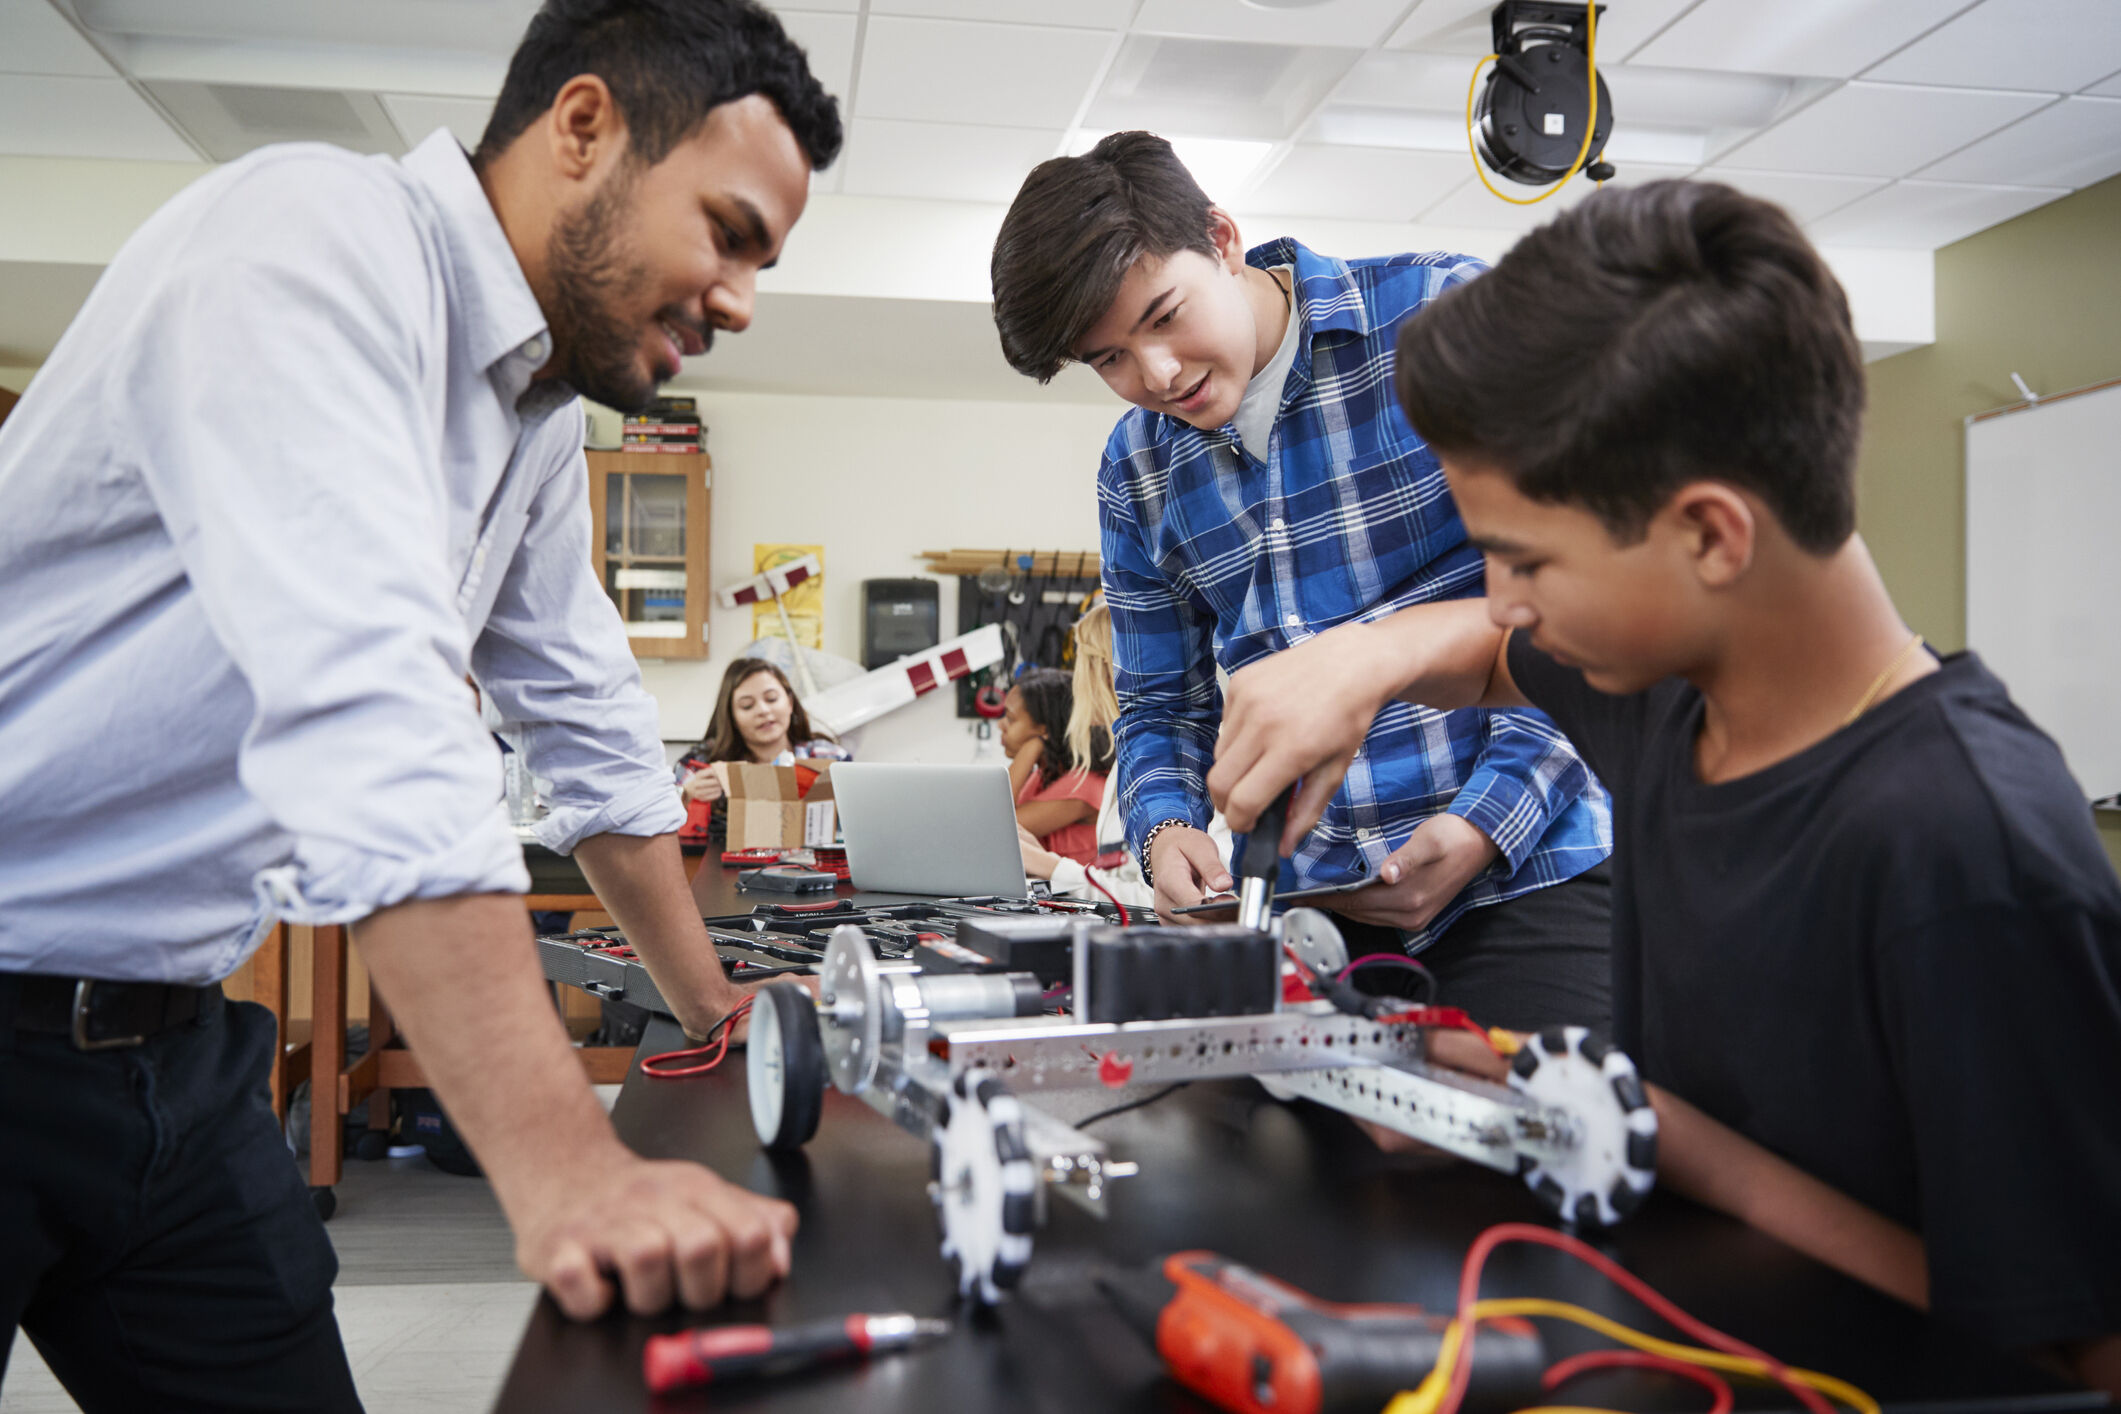 Data centers, Loudoun Education Foundation partner to promote STEM careers